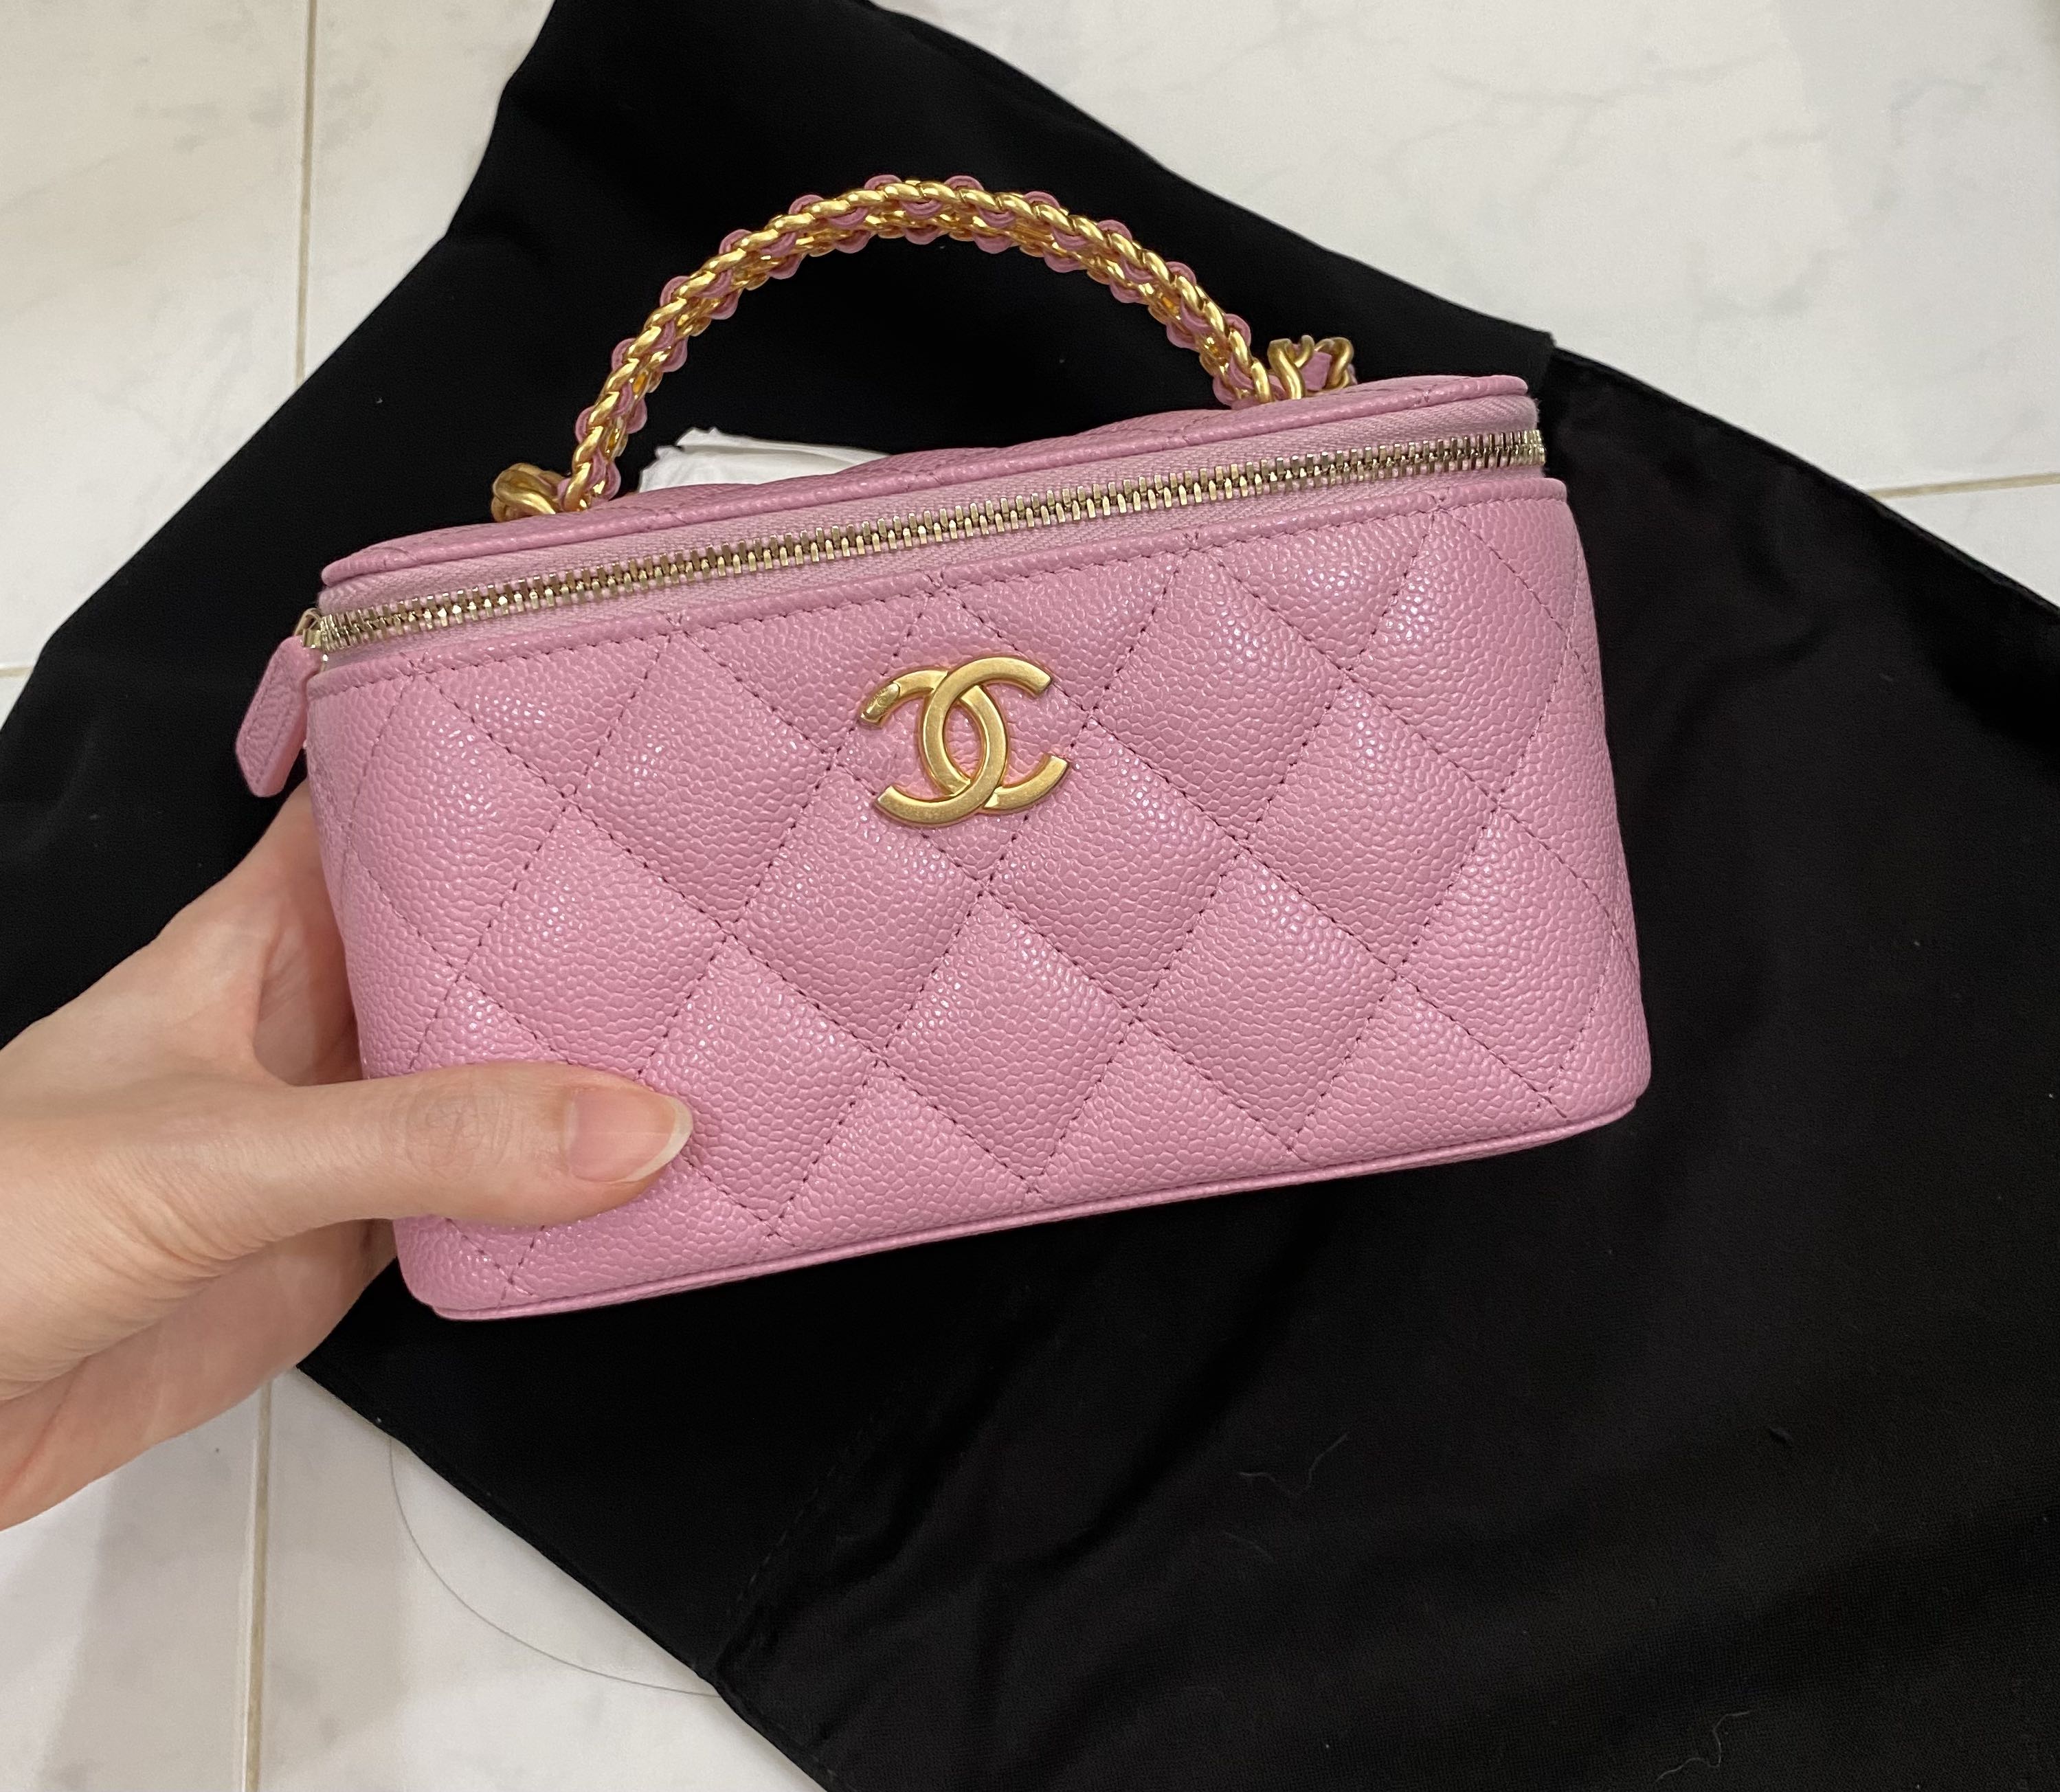 INSTOCK ❤️ 22K Chanel Top Handle Vanity Bag